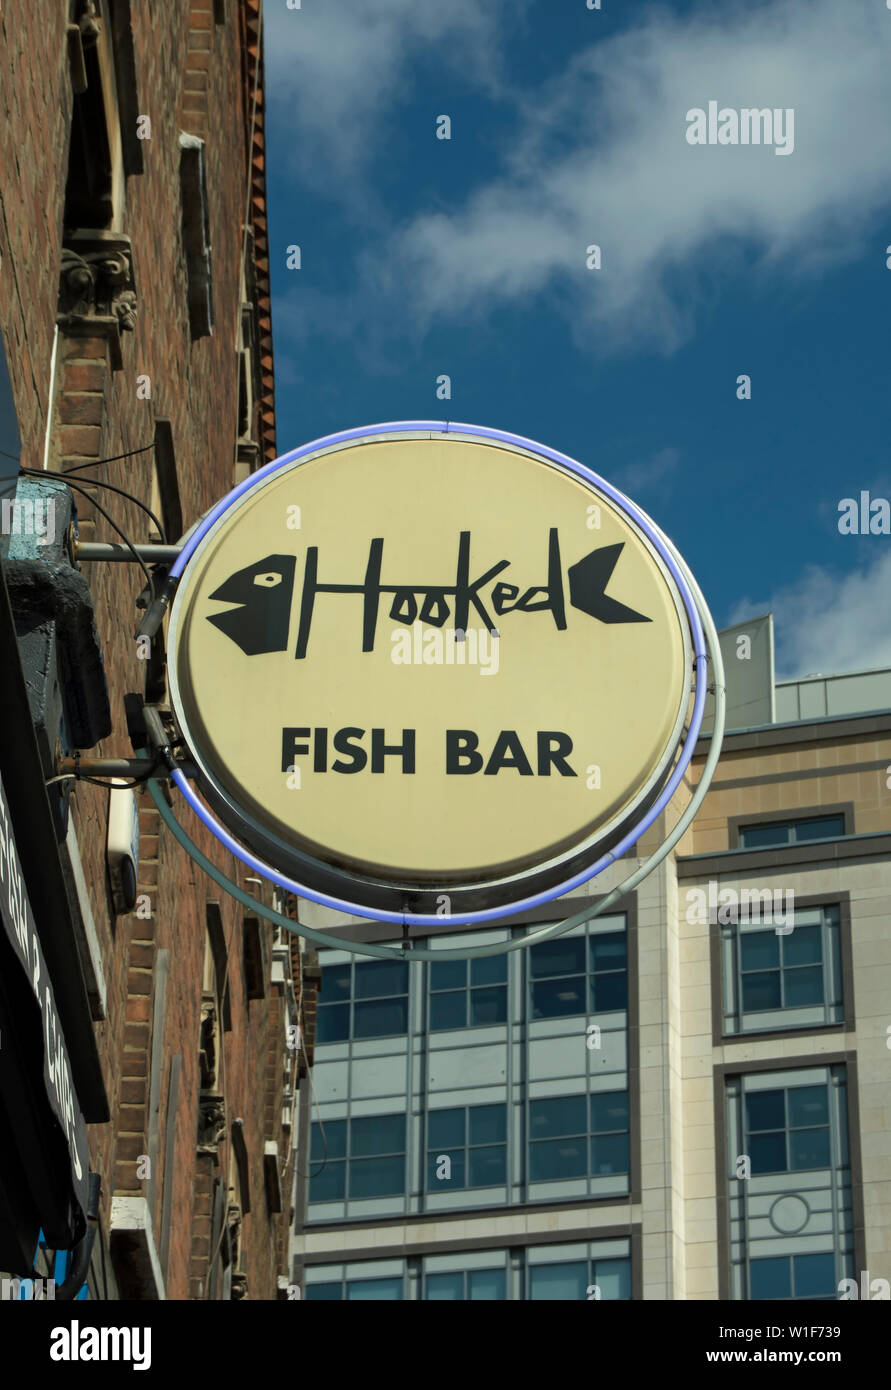 hanging sign for hooked fish bar, hammersmith, london, england, using a fish skeleton image Stock Photo